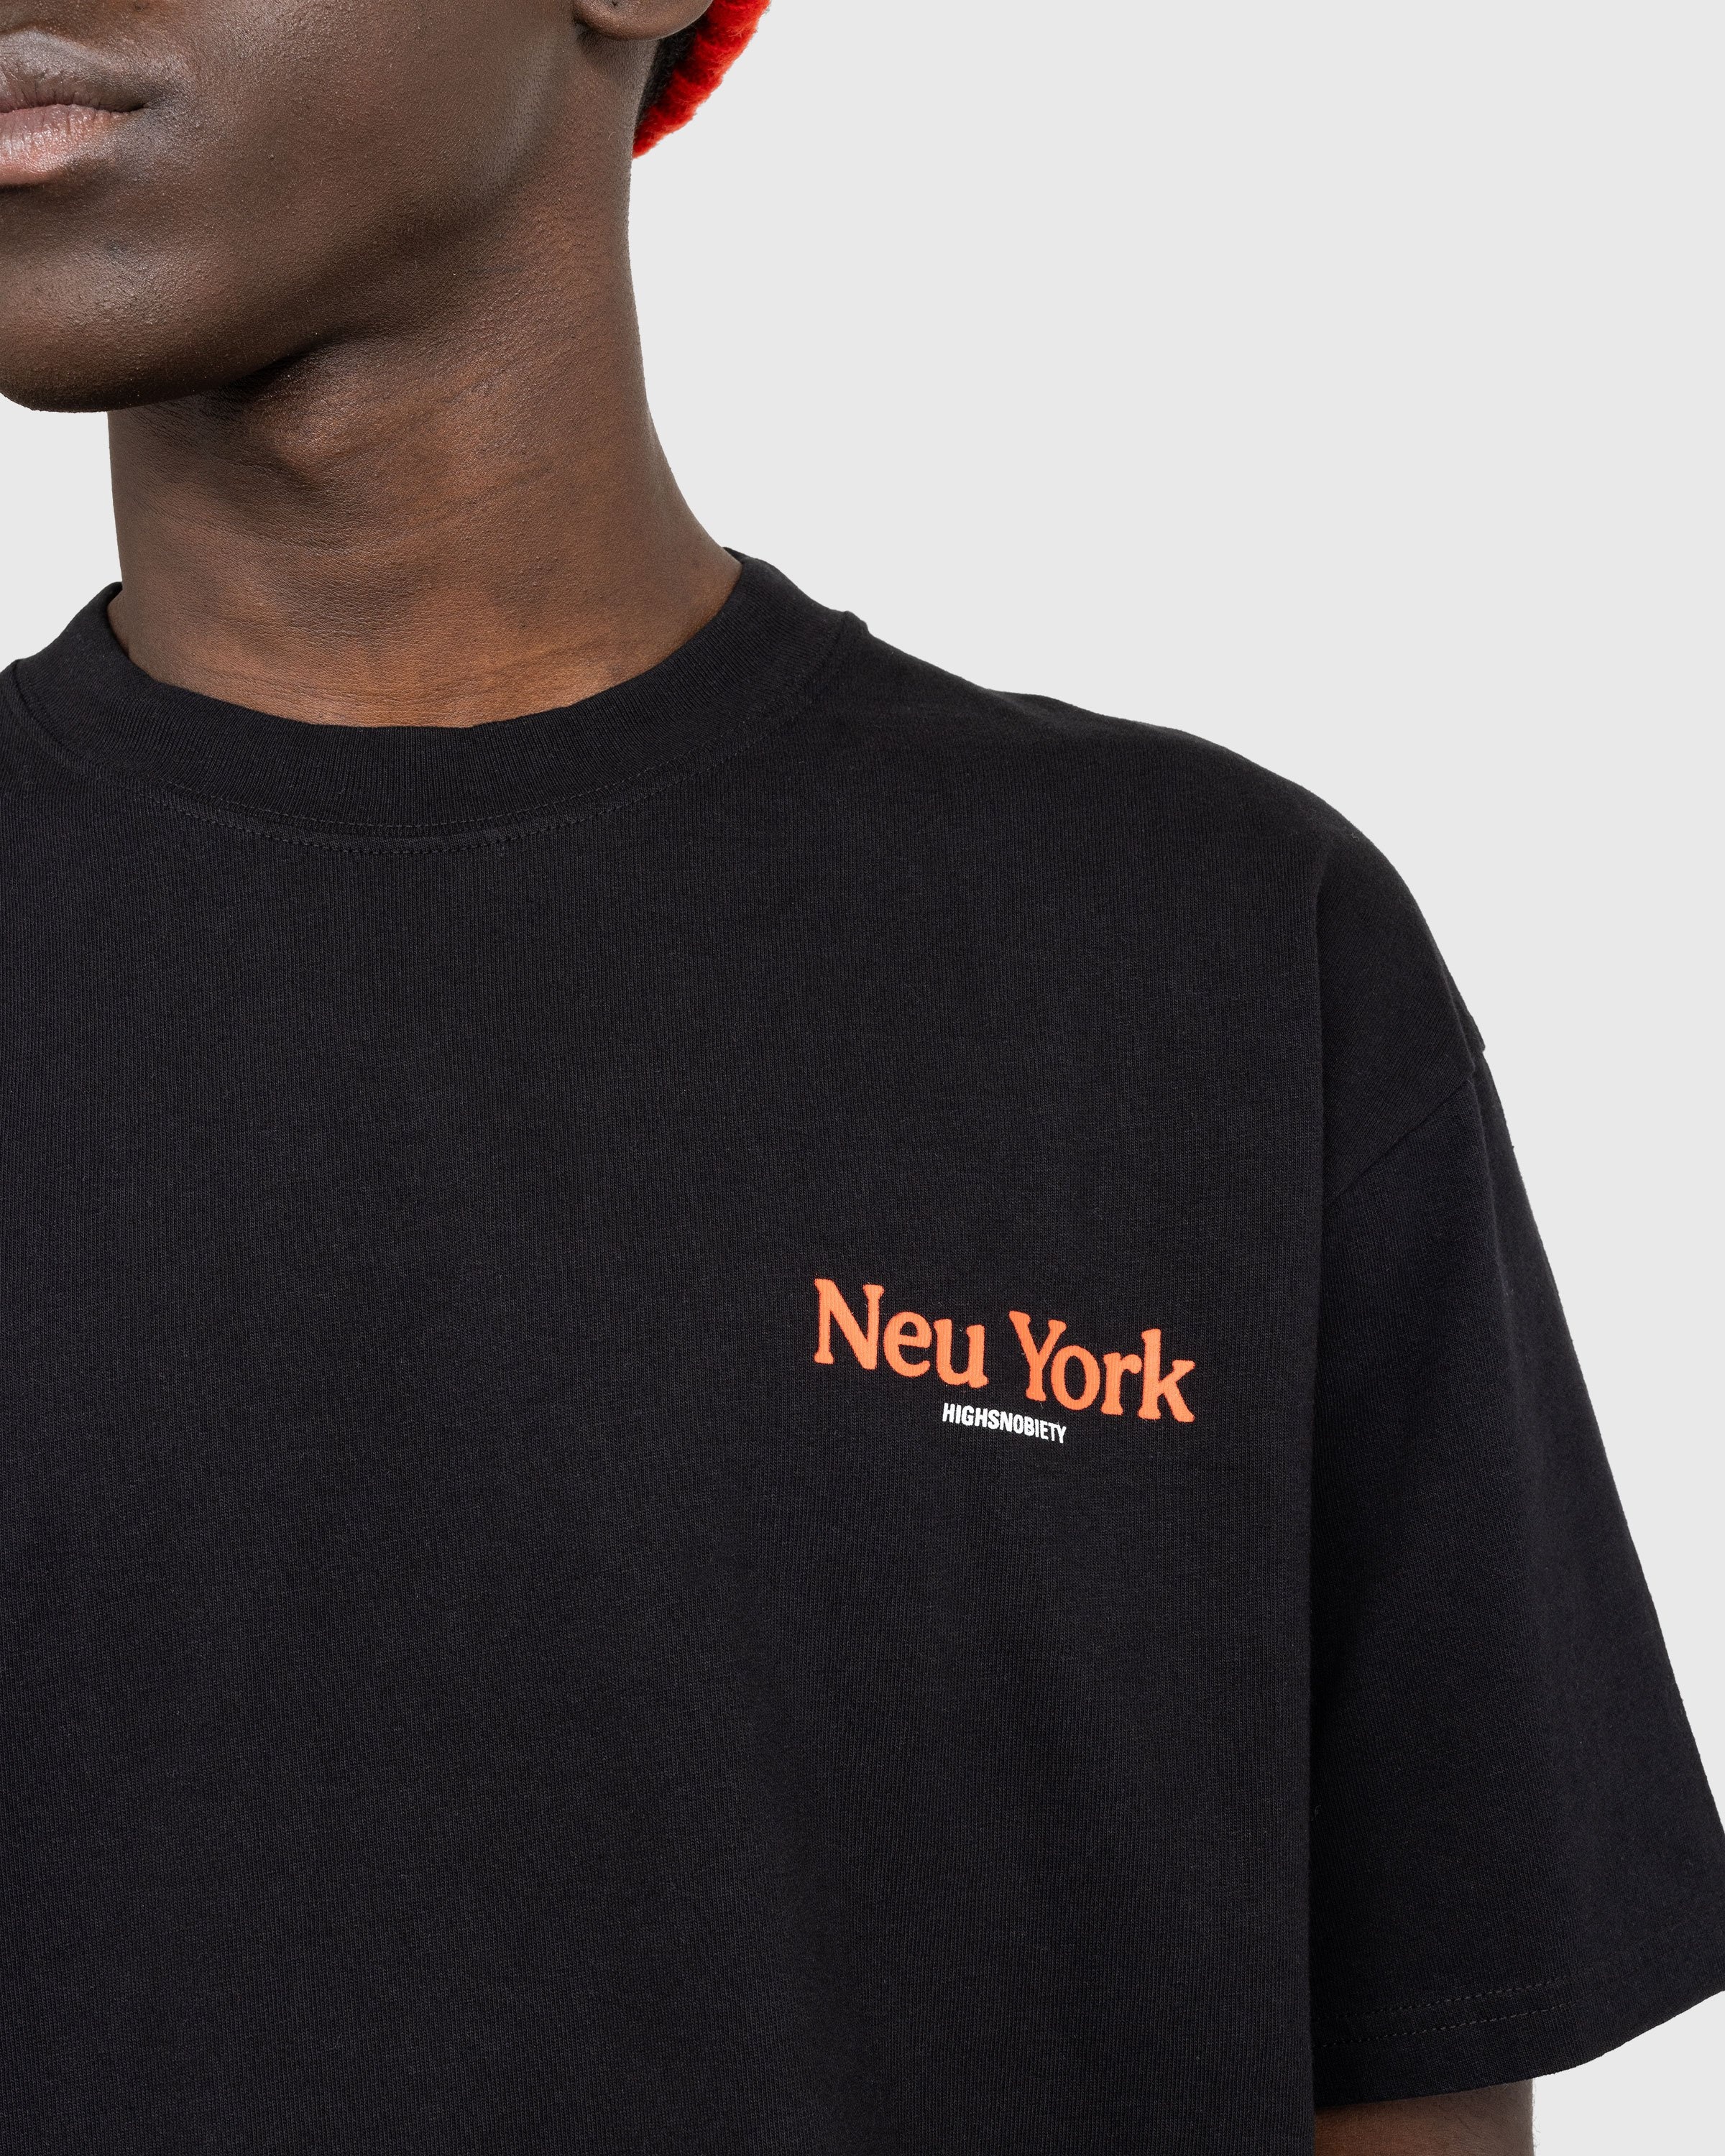 Highsnobiety – Neu York T-Shirt Black - T-shirts - Black - Image 5